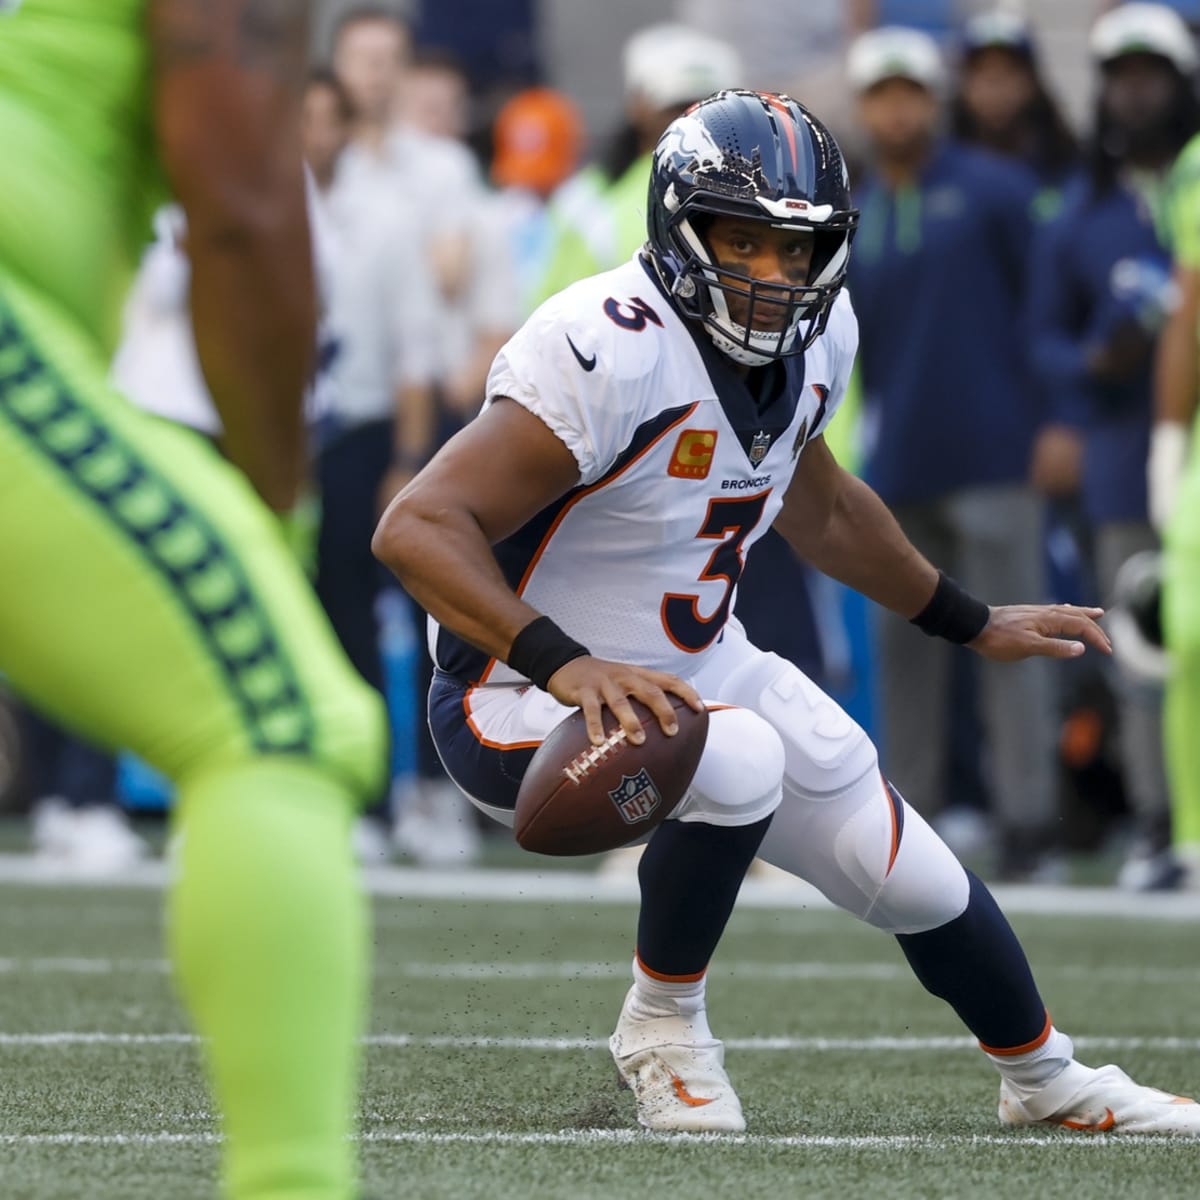 Can't-Miss Play: Ex-Broncos teammates Seattle Seahawks quarterback